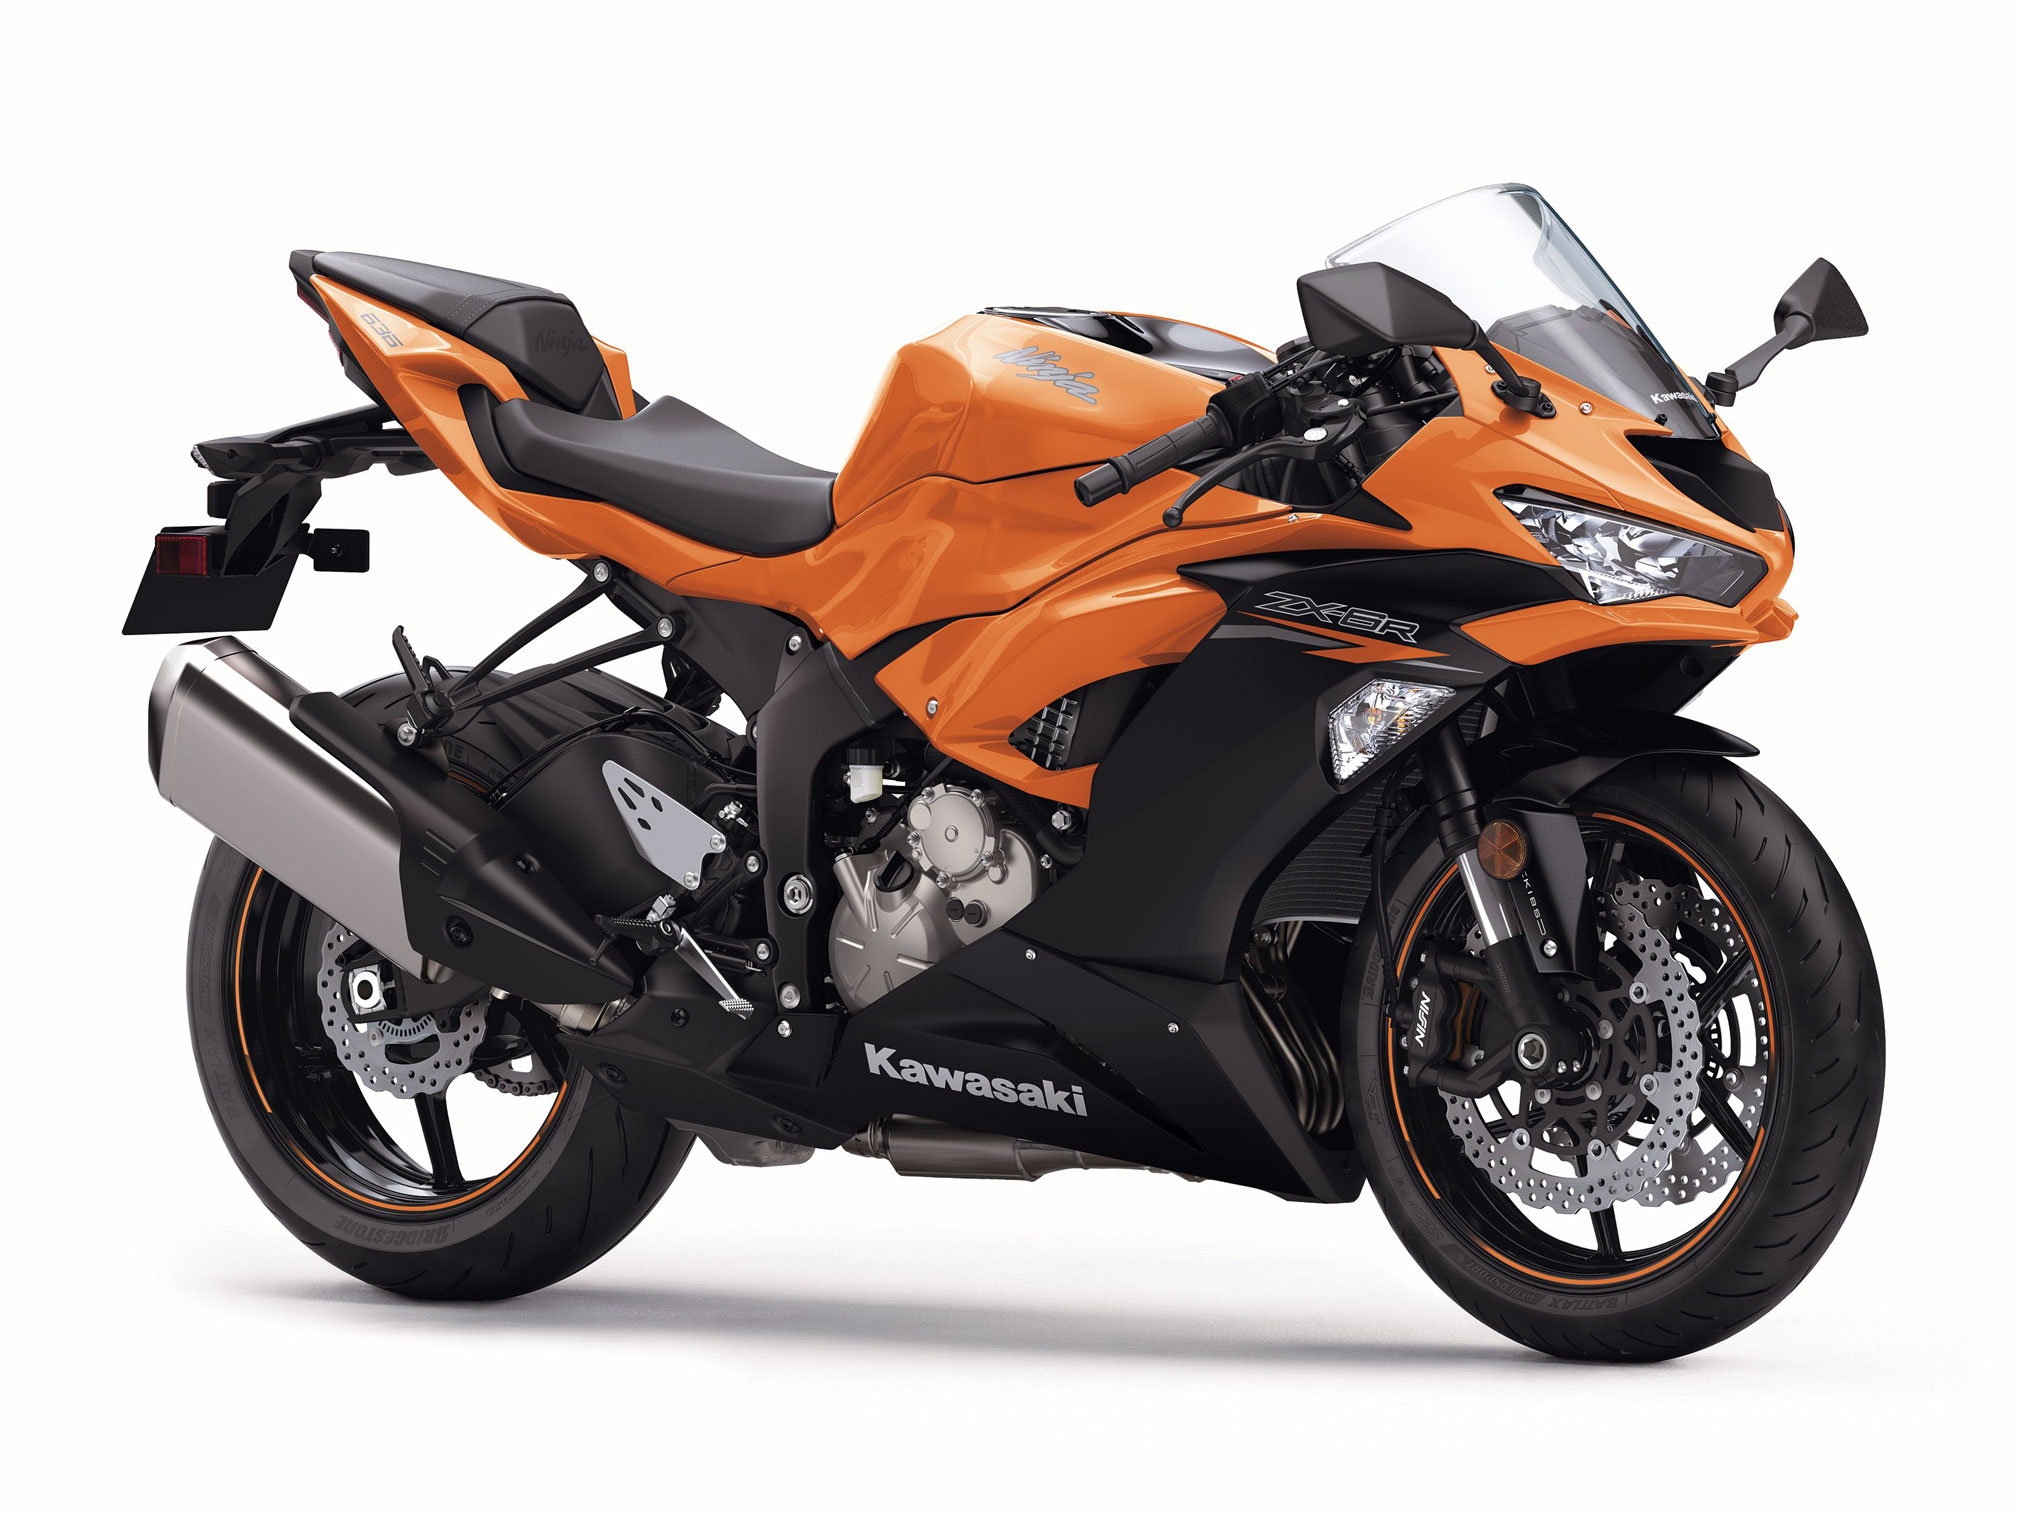 2020 Kawasaki Ninja • Total Motorcycle